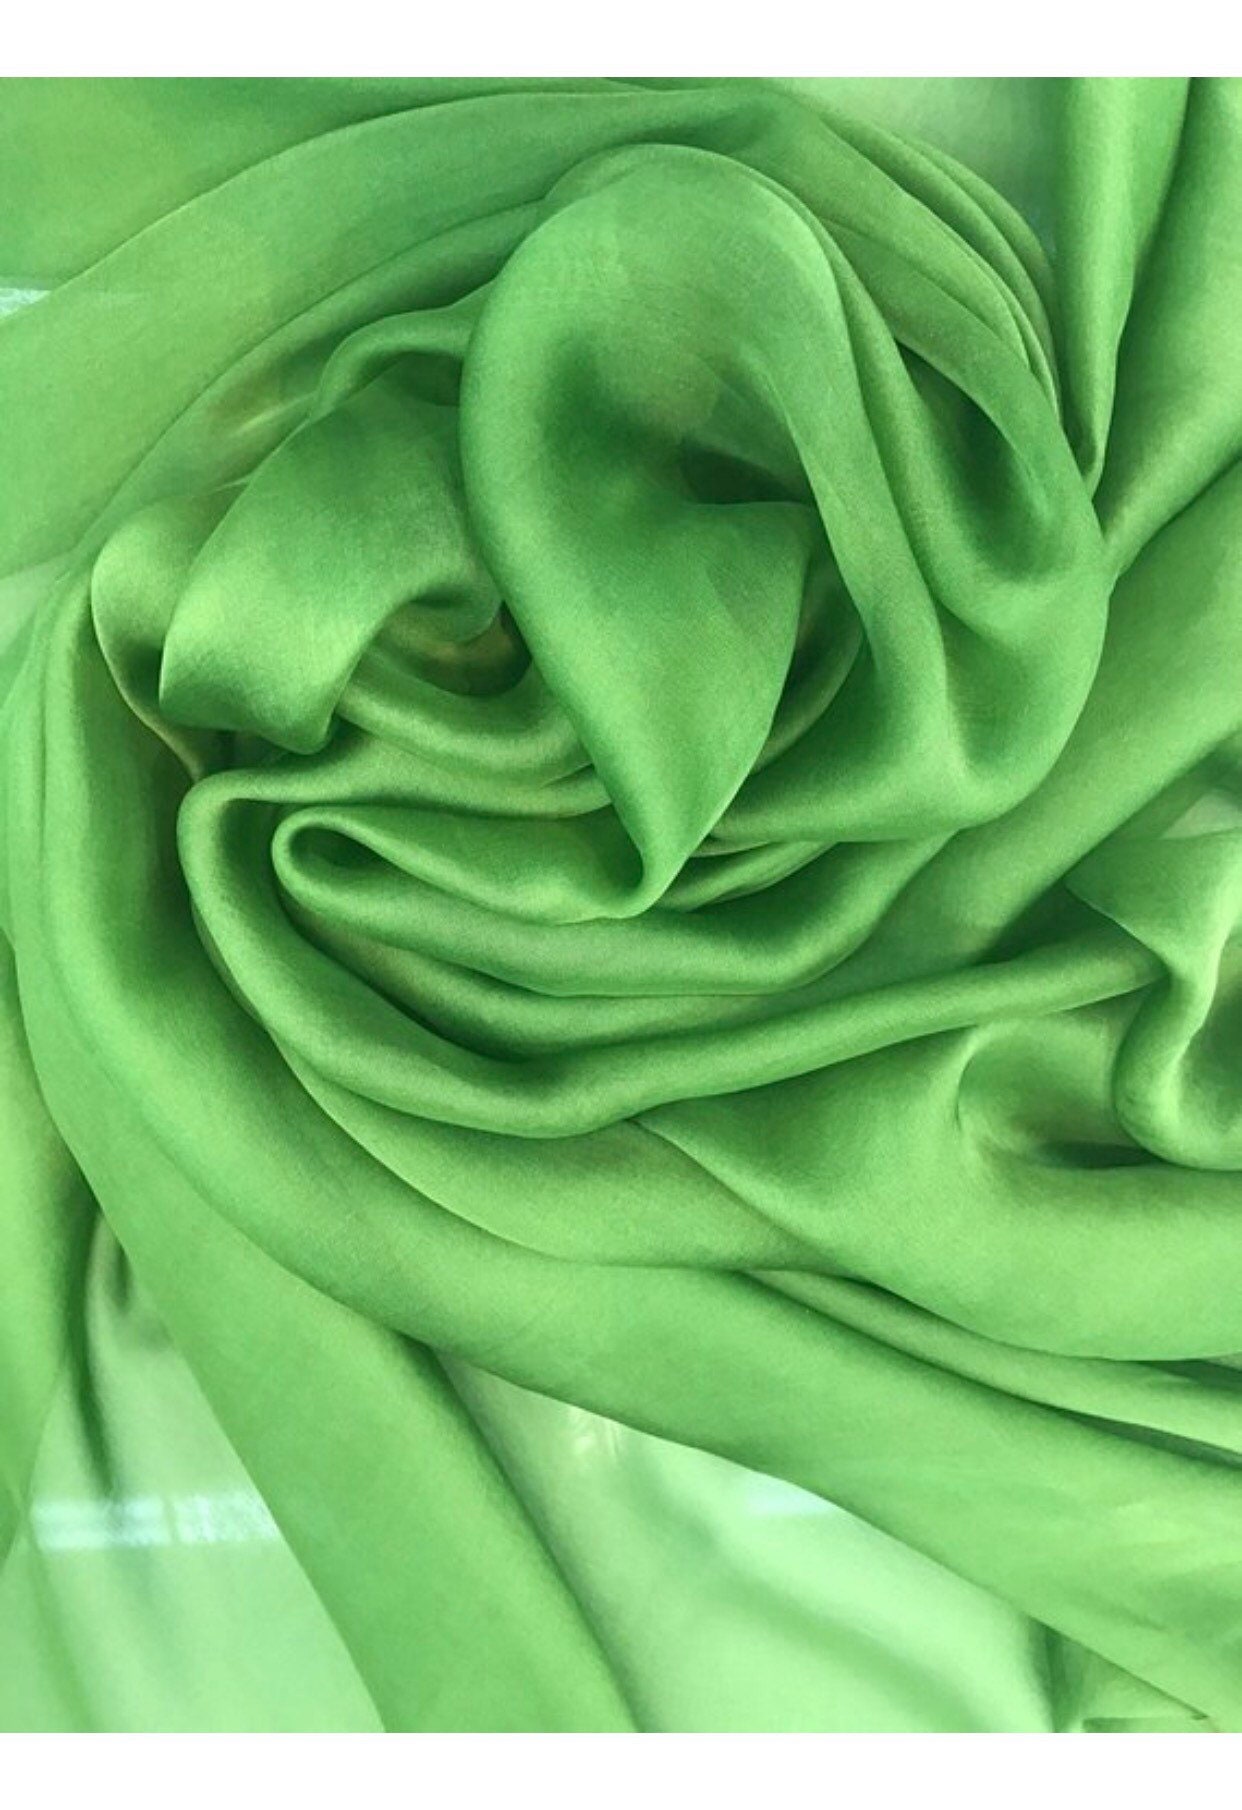 French Silk chiffon 54 wide Beautiful parrot green silk chiffon fabric ...